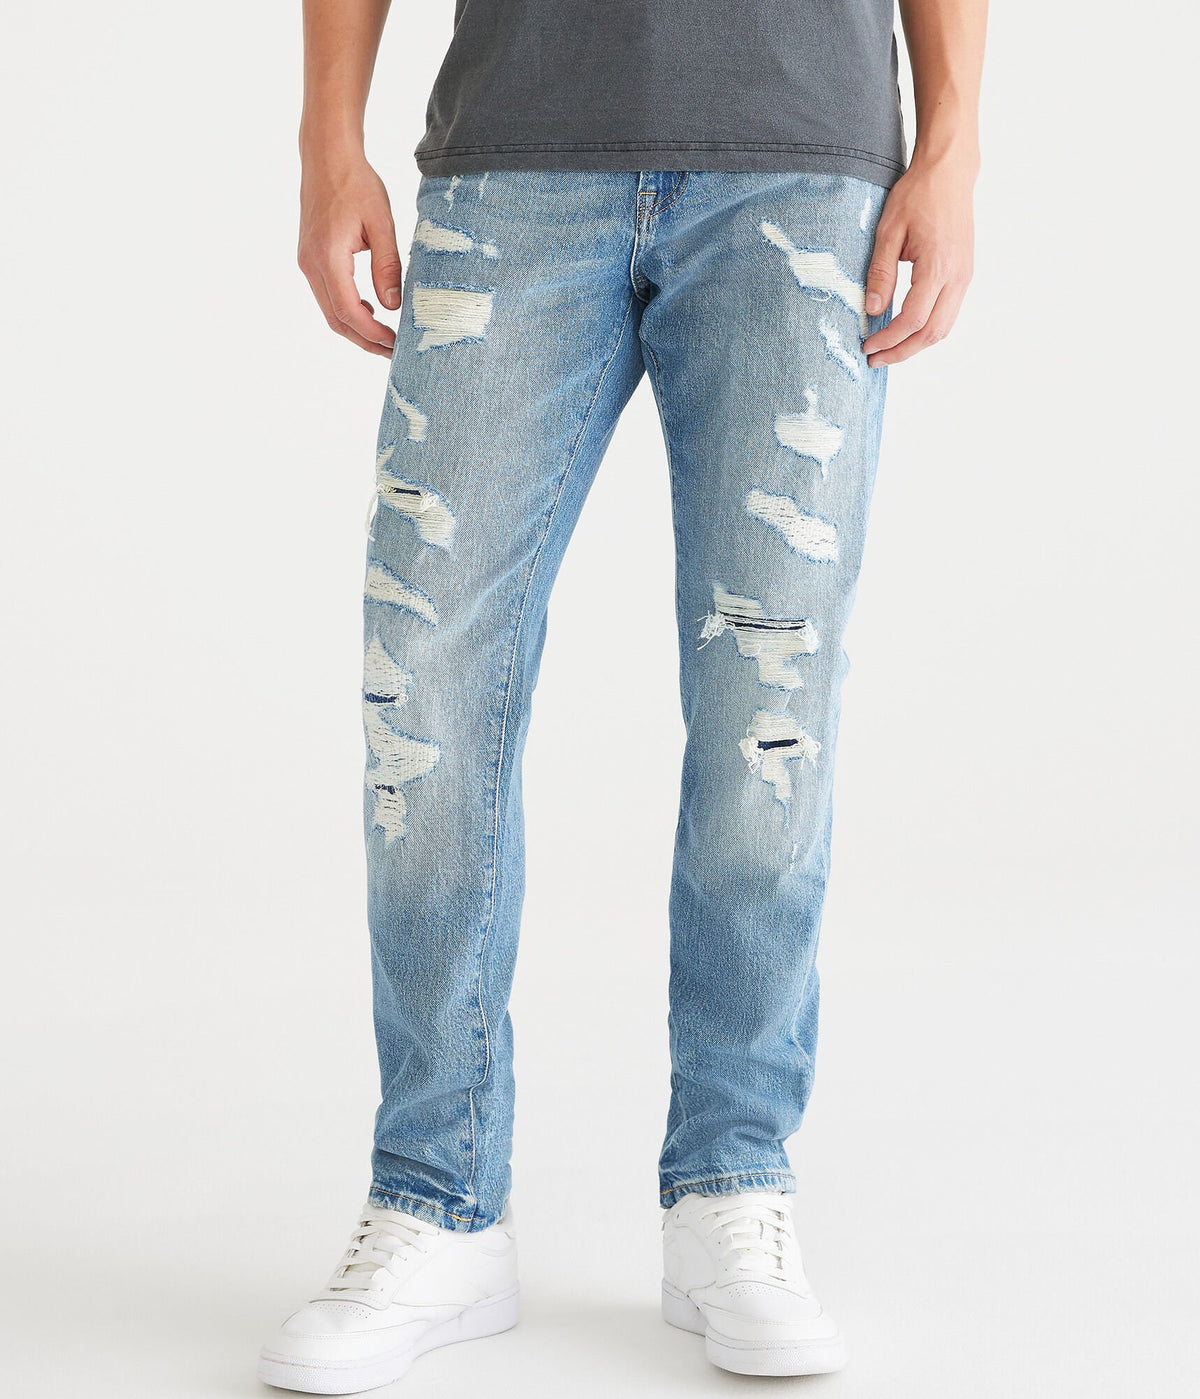 Aeropostale Mens' Slim Jean - Washed Denim - Size 32X32 - Cotton - Teen Fashion & Clothing Medium Wash